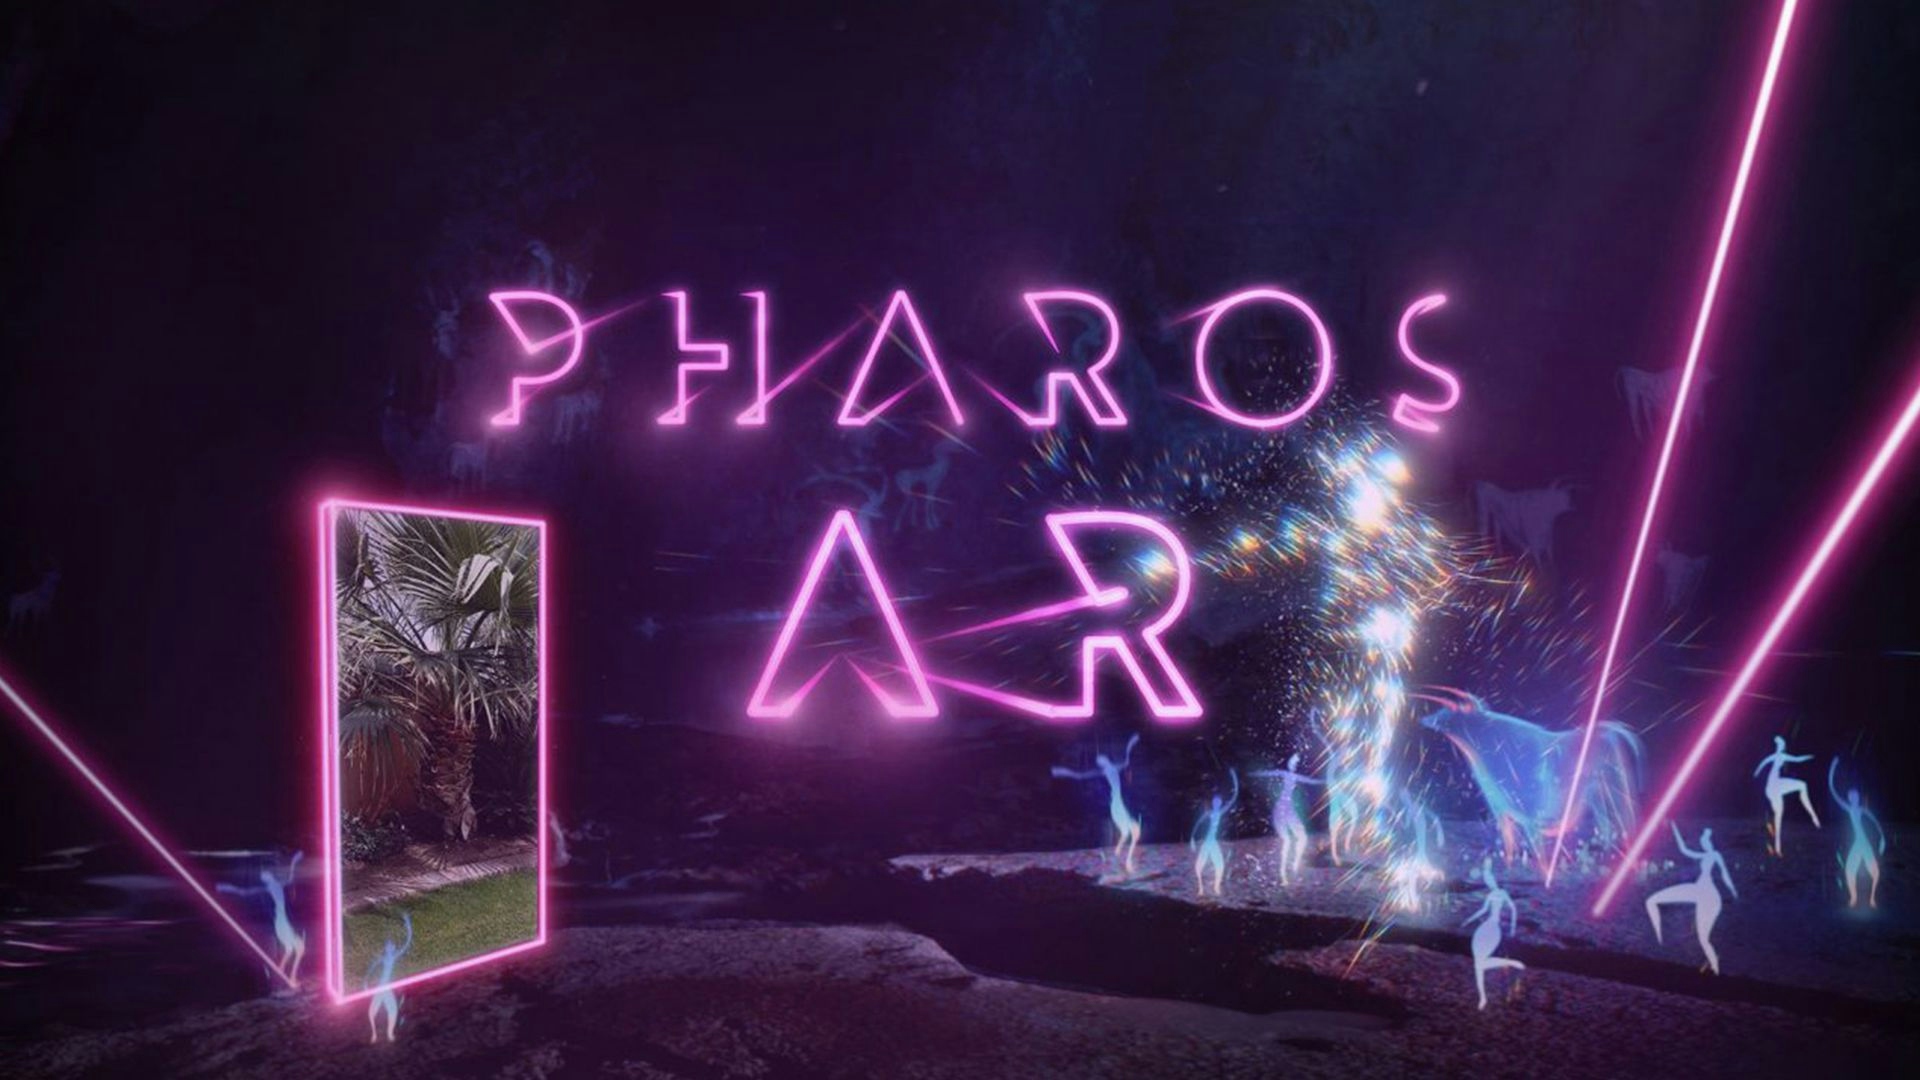 Pharos AR – Made with Unity